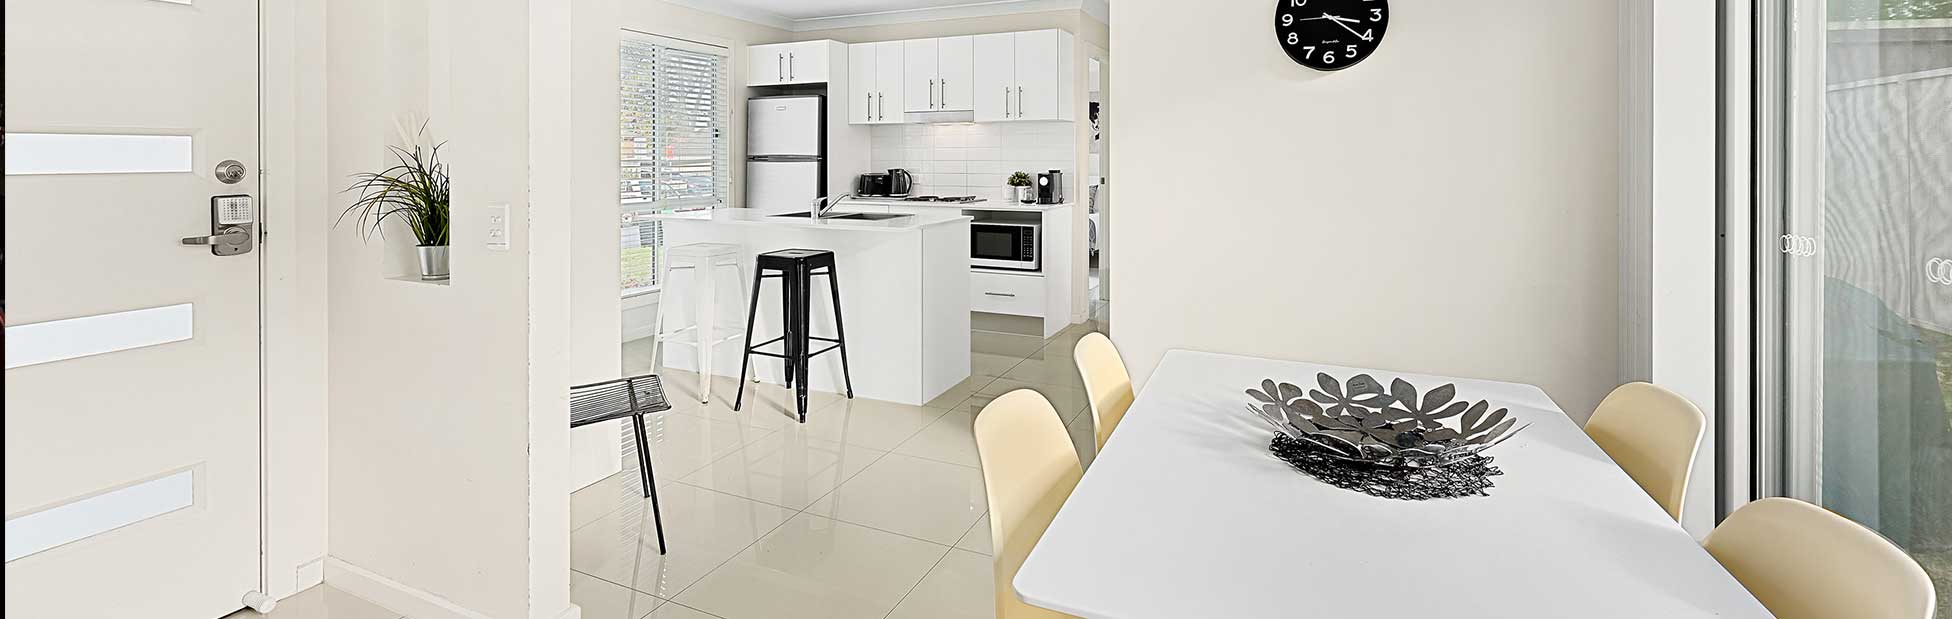 Image of a white kitchen